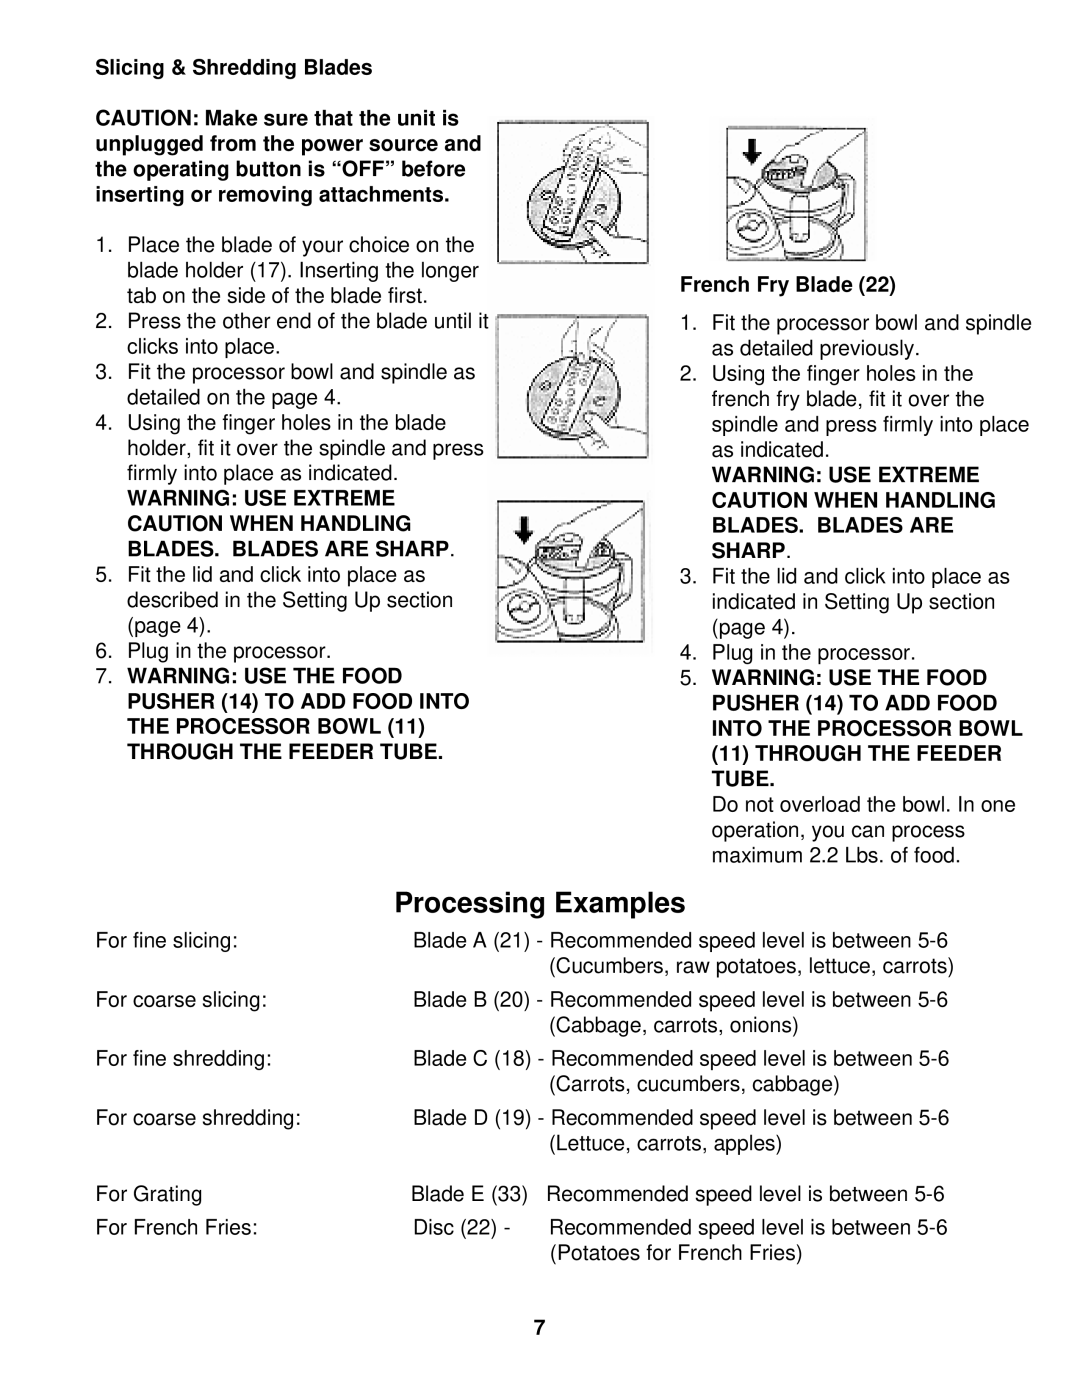 Bravetti BP100 instruction manual Processing Examples 